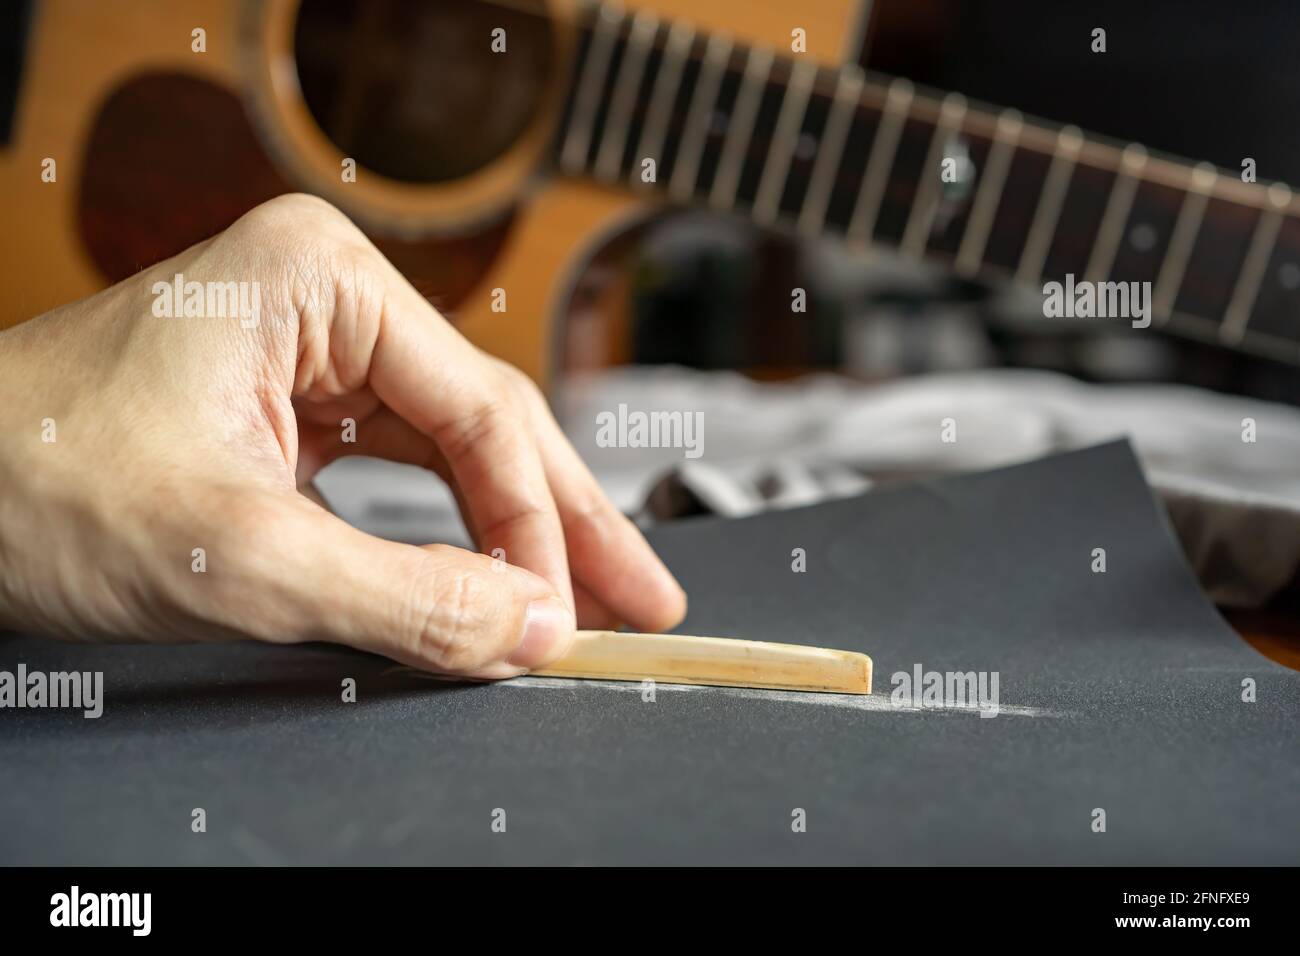 Repair guitar immagini e fotografie stock ad alta risoluzione - Alamy